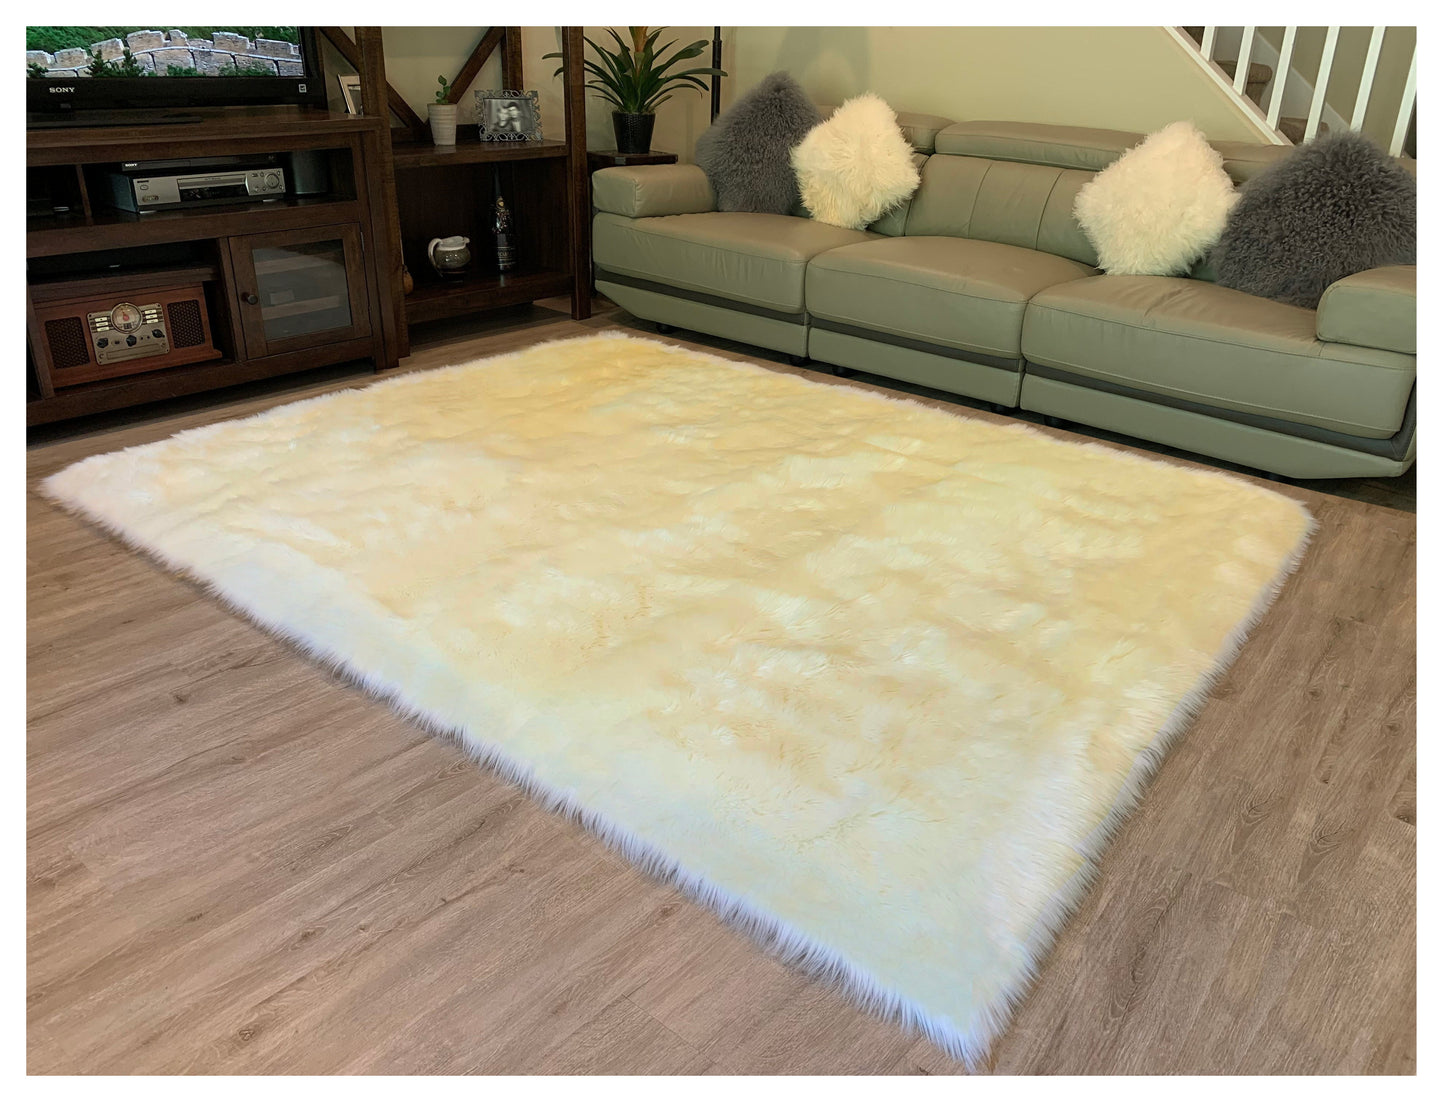 Faux sheepskin rug Rectangle Shaped 6'X9' (180cm x 270cm)